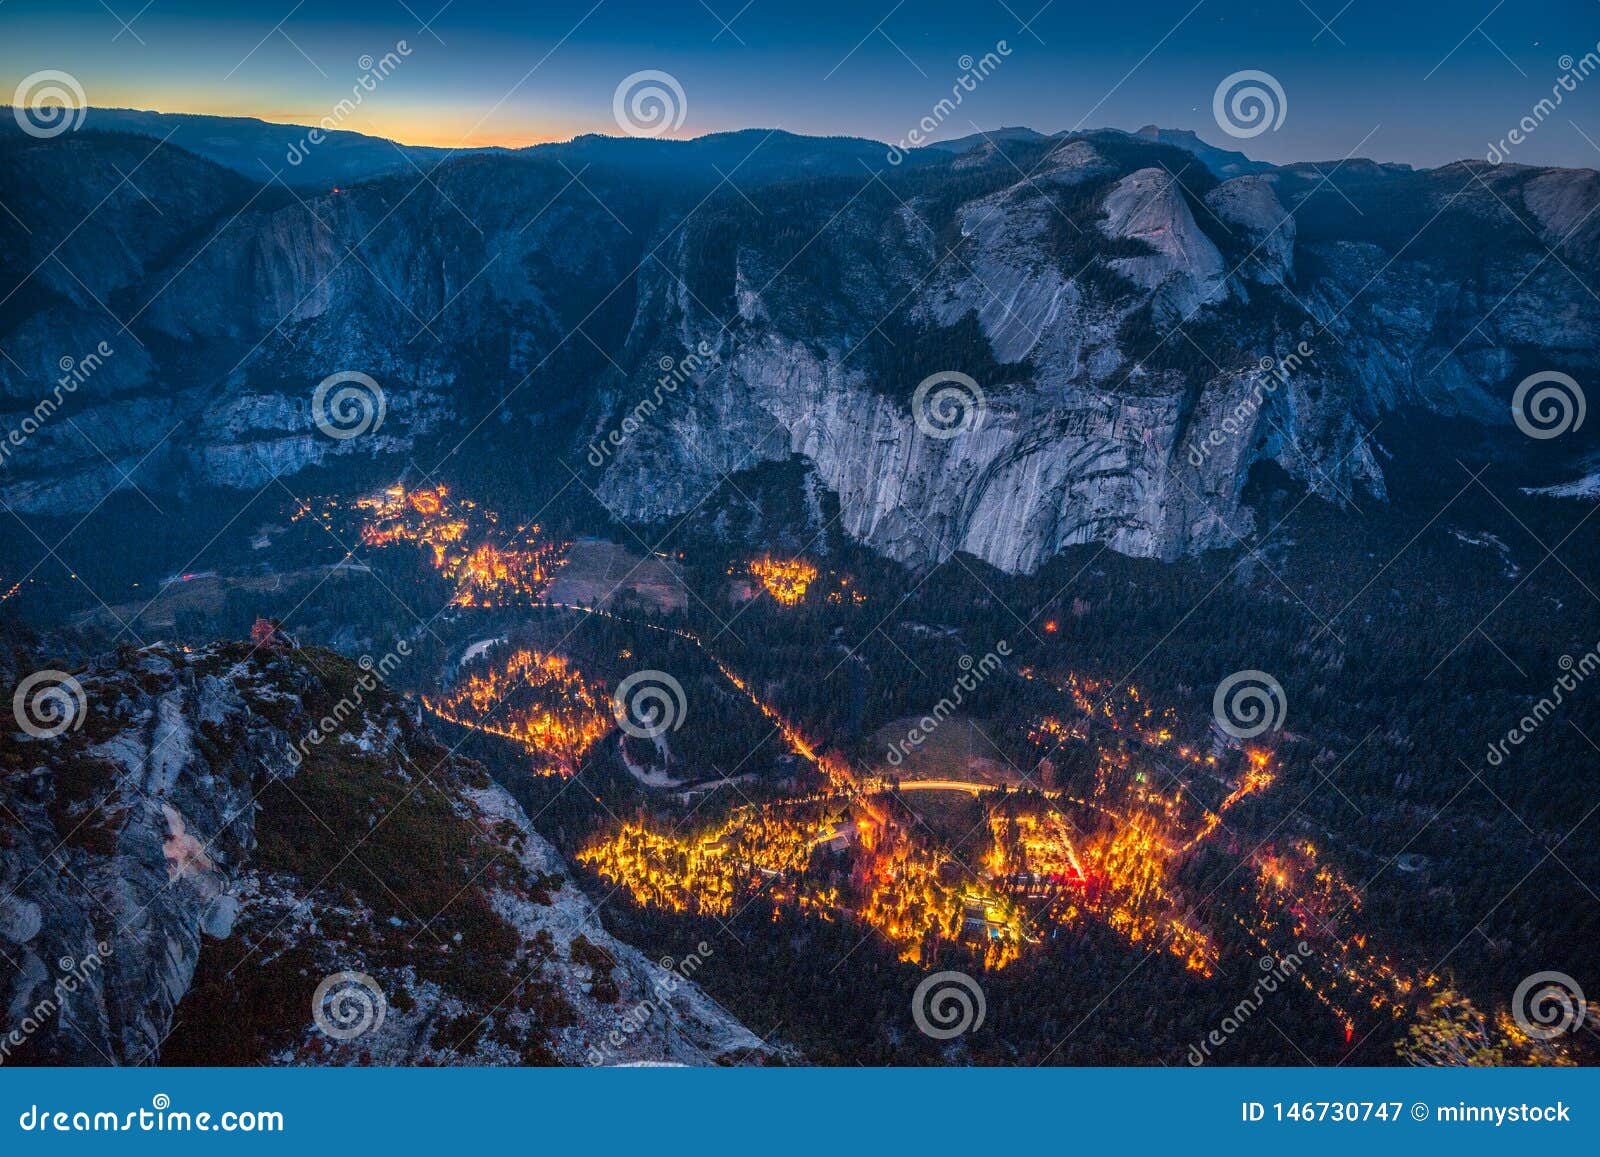 yosemite valley at night, california, usa